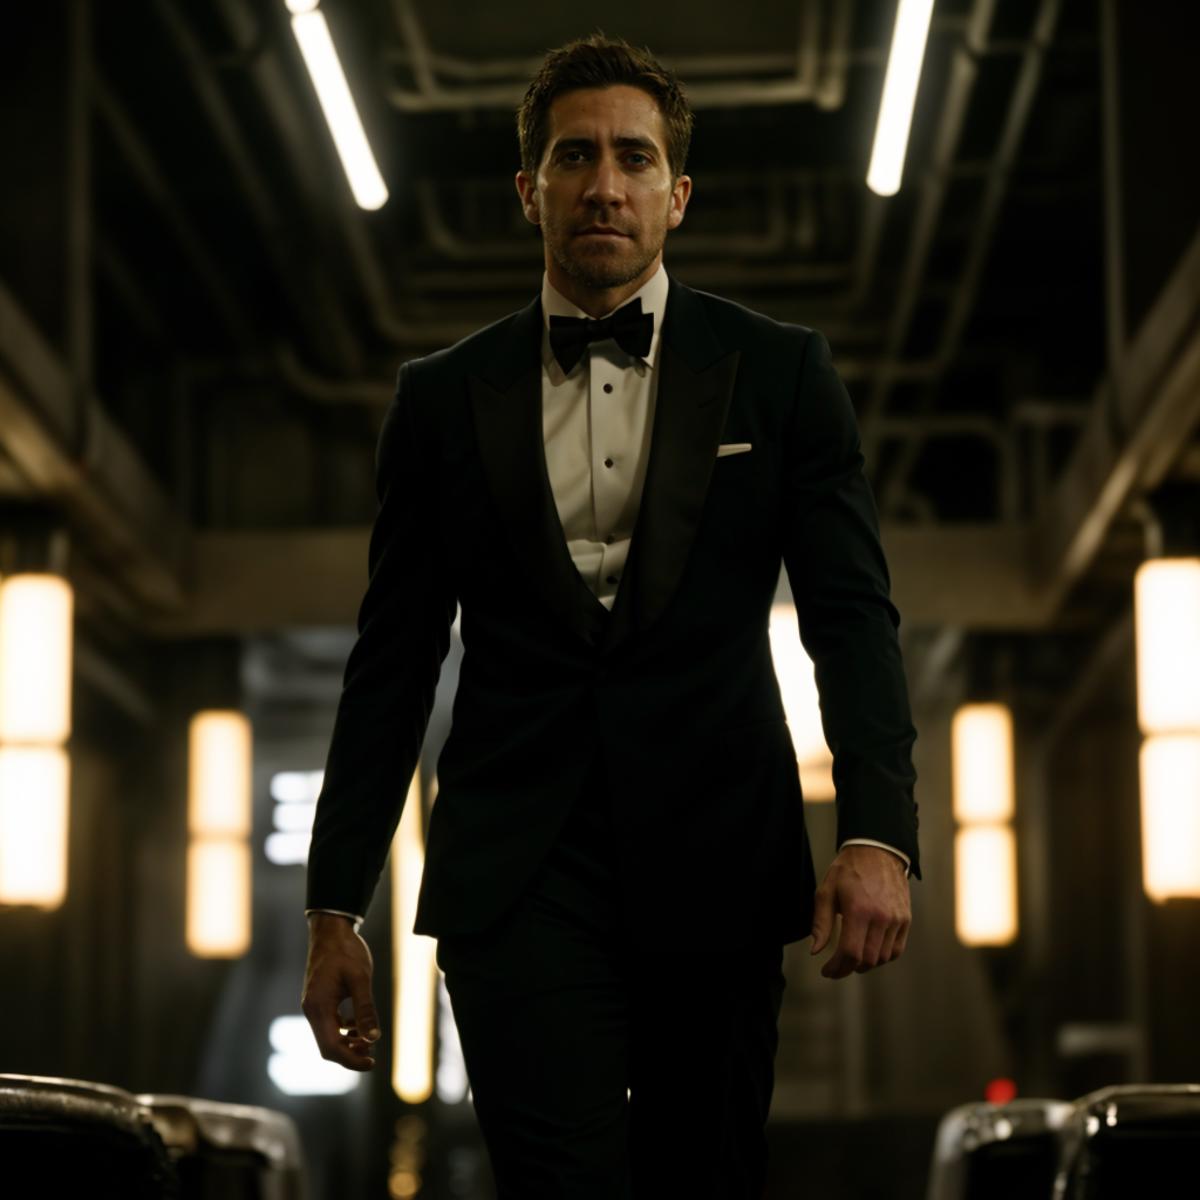 Jake Gyllenhaal image by eddnor